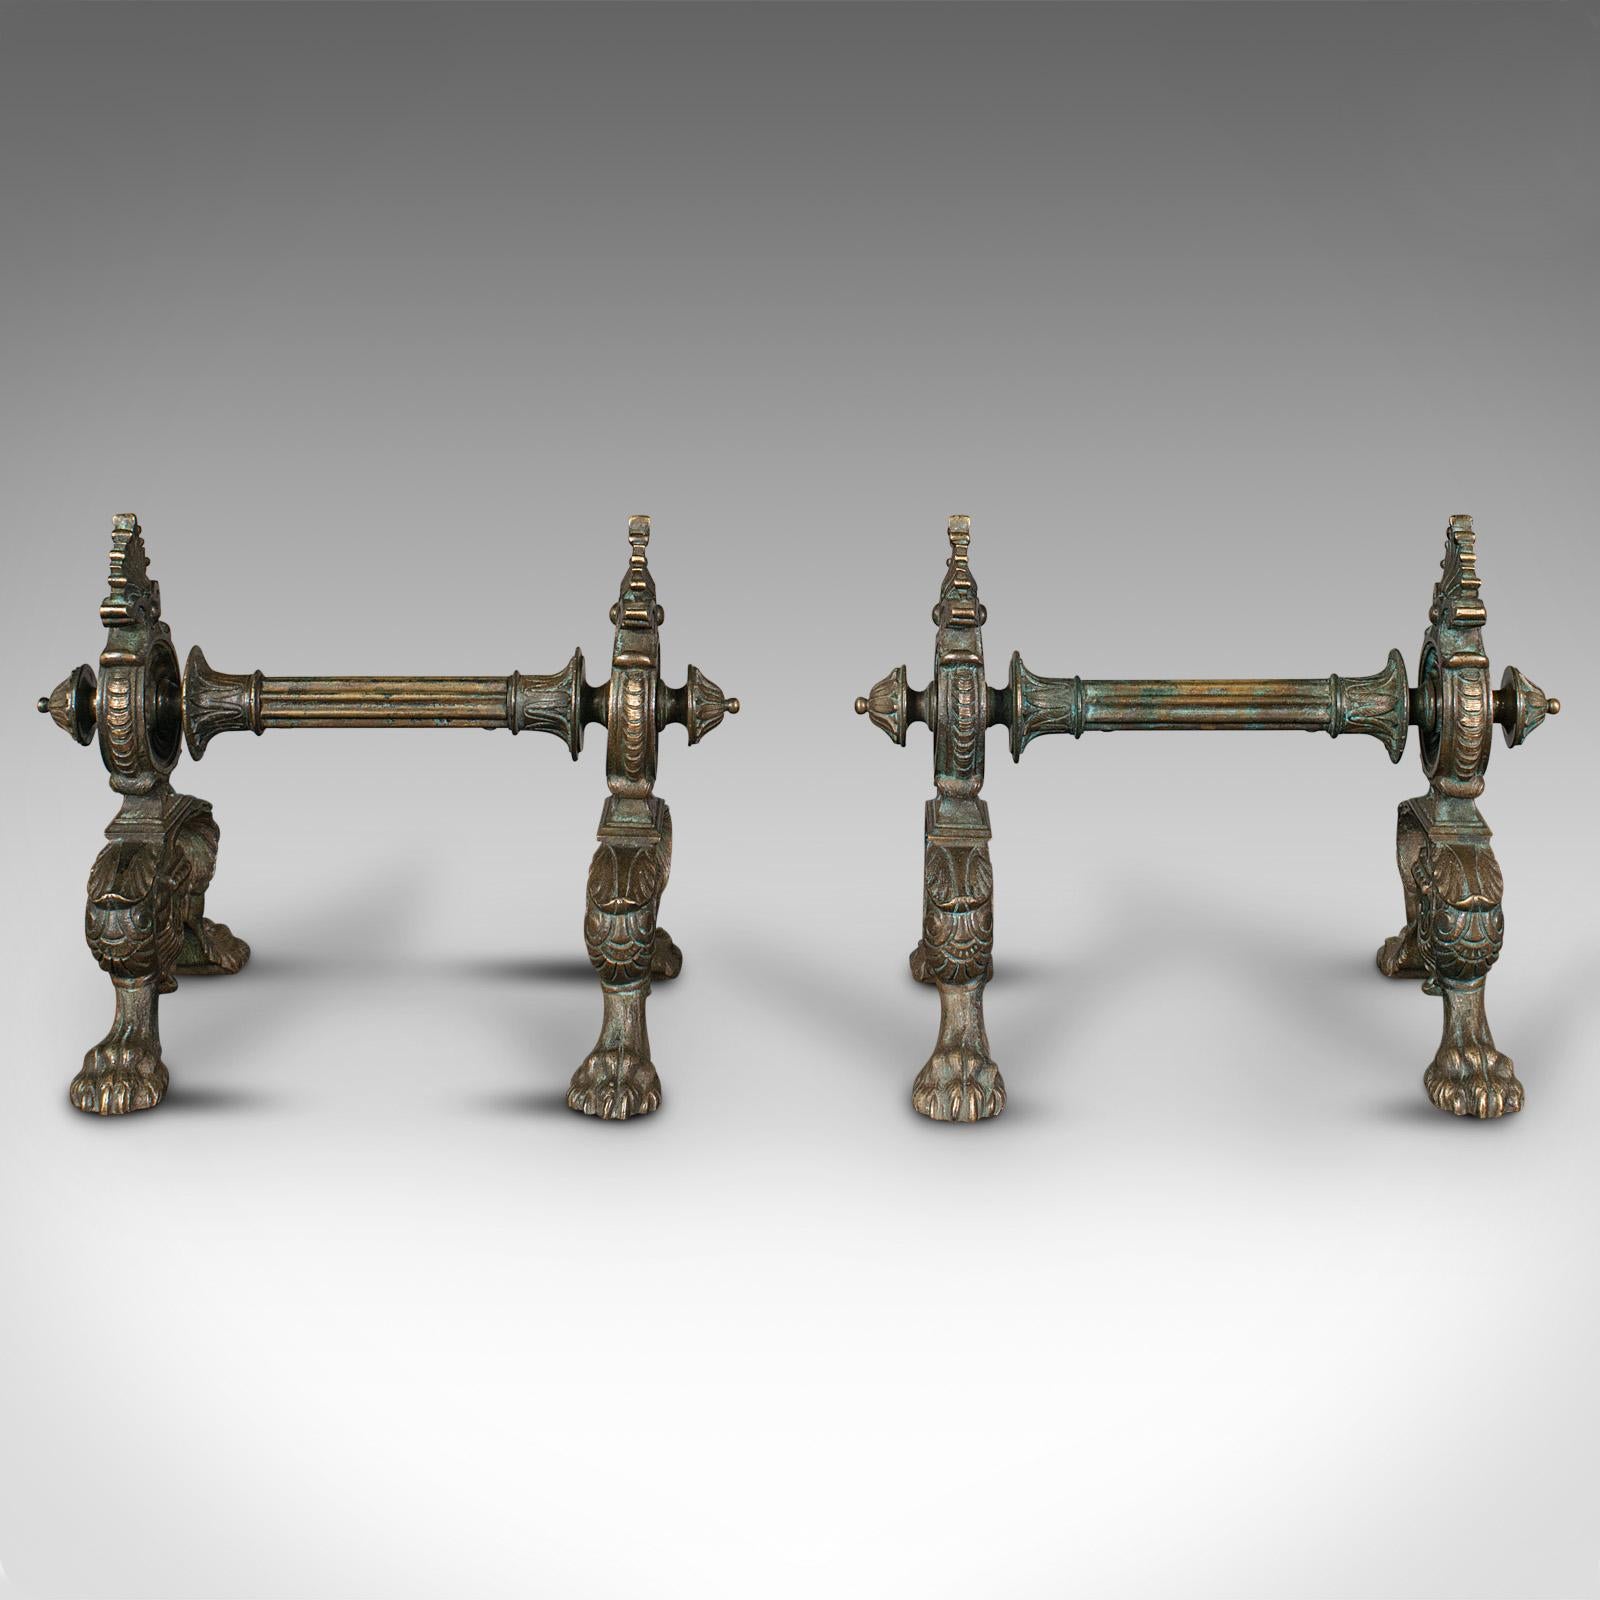 British Pair of Antique Decorative Fire Dogs, English, Bronze, Tool Rest, Art Nouveau